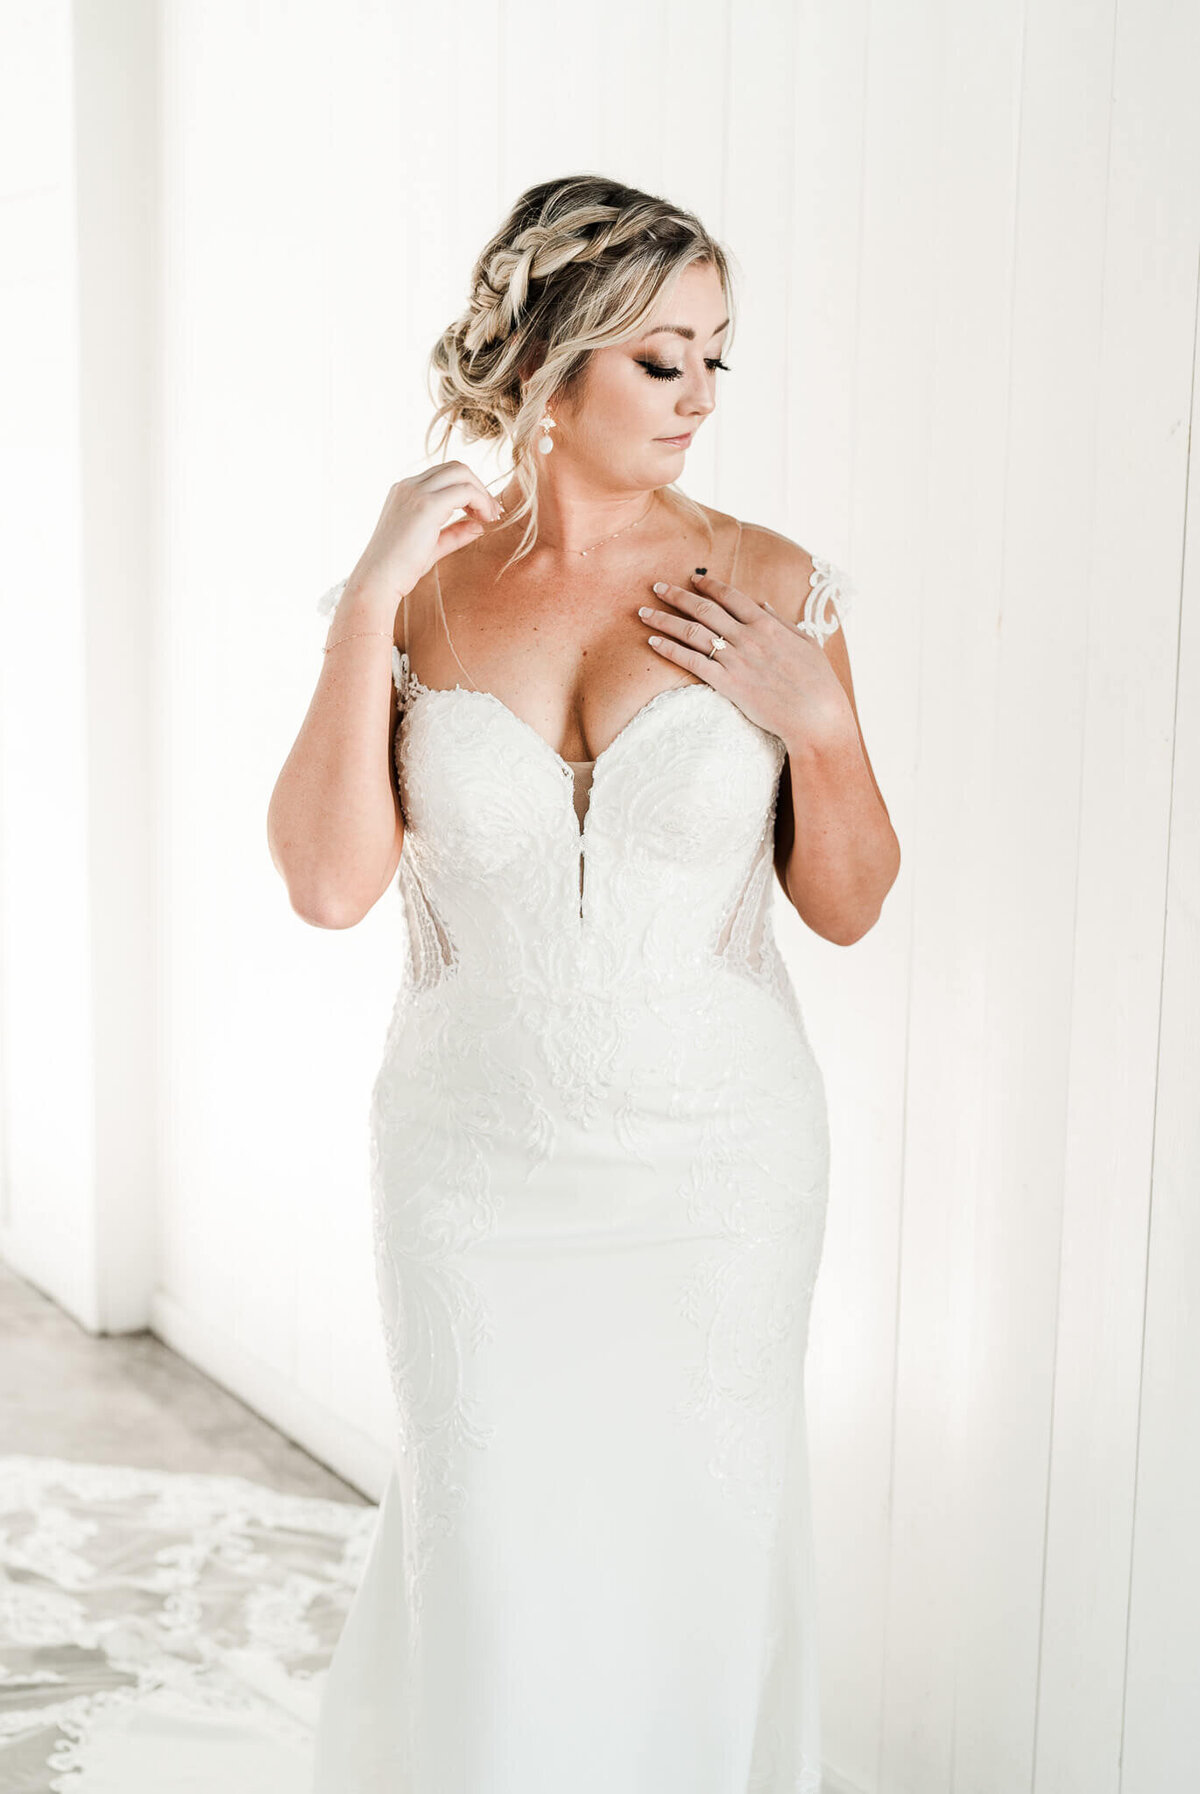 The-Gulf-Florida-Wedding-Photos-Video-Film-Megan-Chase-Bridal-Bride-Getting-Ready-Editorial